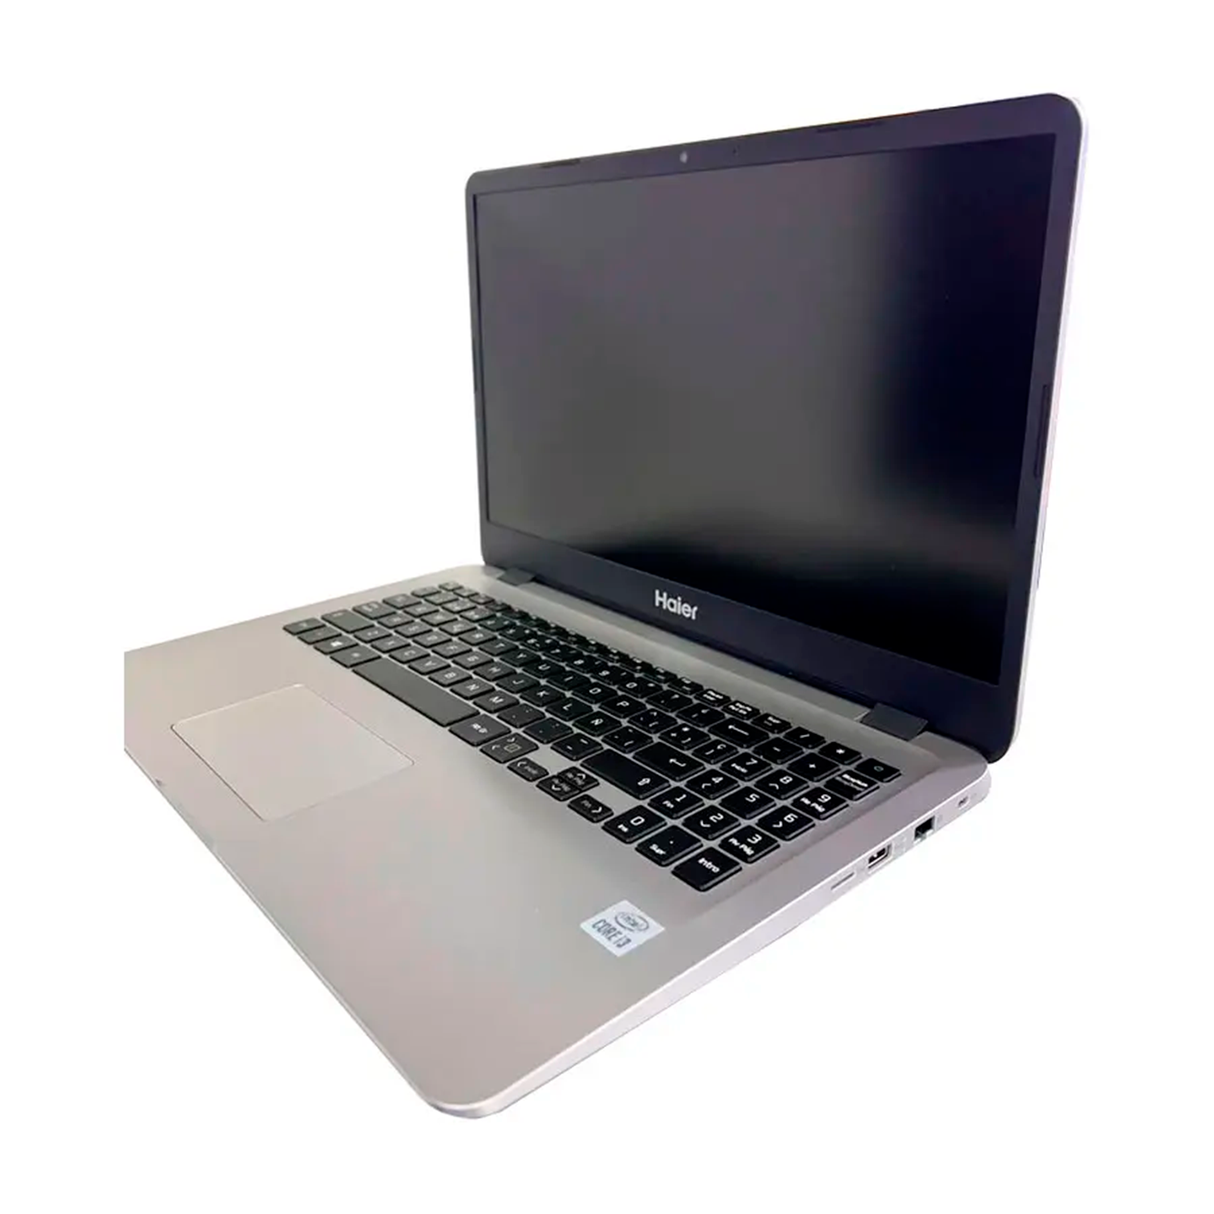 Laptop Haier Y15T Intel Core I5 1135G7 RAM 8GB Disco 256GB SSD 15.6" FHD Freedos